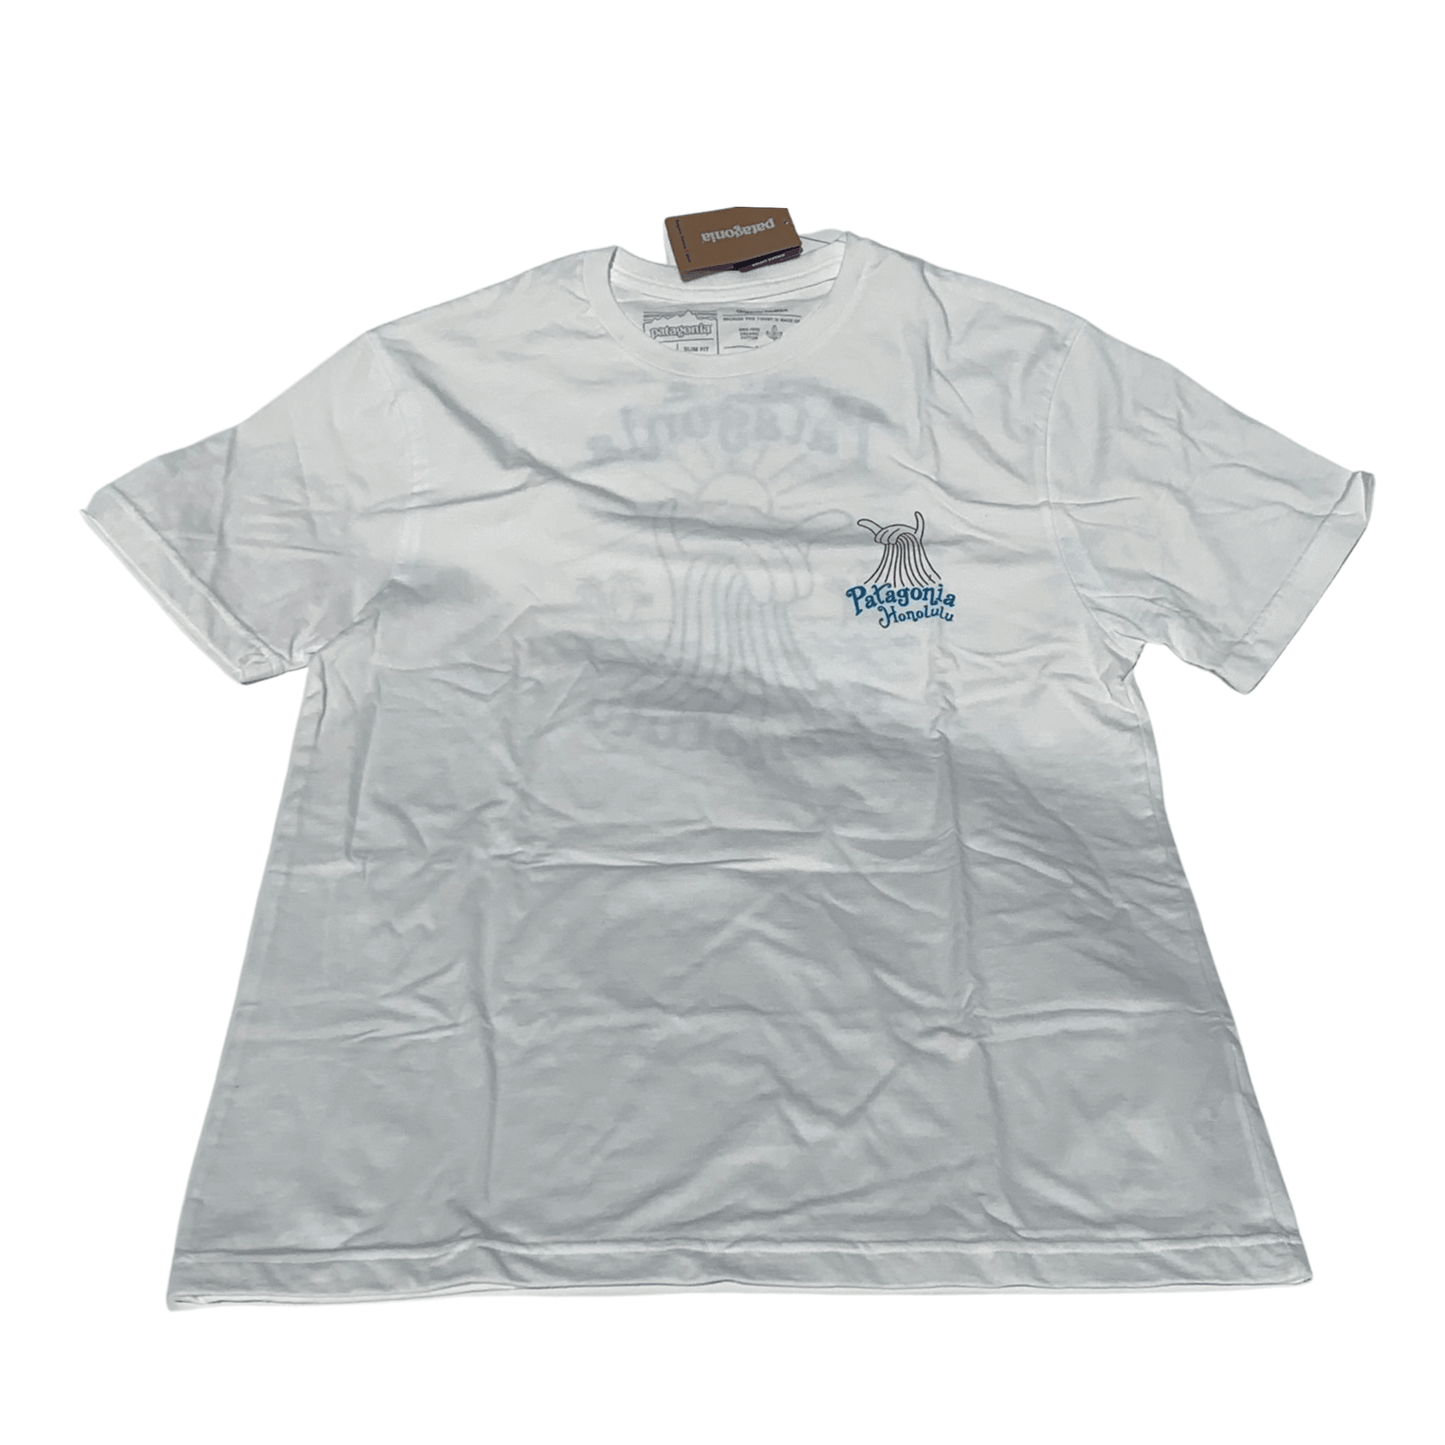 PATAGONIA/パタゴニア ハワイ パタロハ メンズ 半袖 Tシャツ オーガニックコットン ホワイト ハワイ直輸入 S